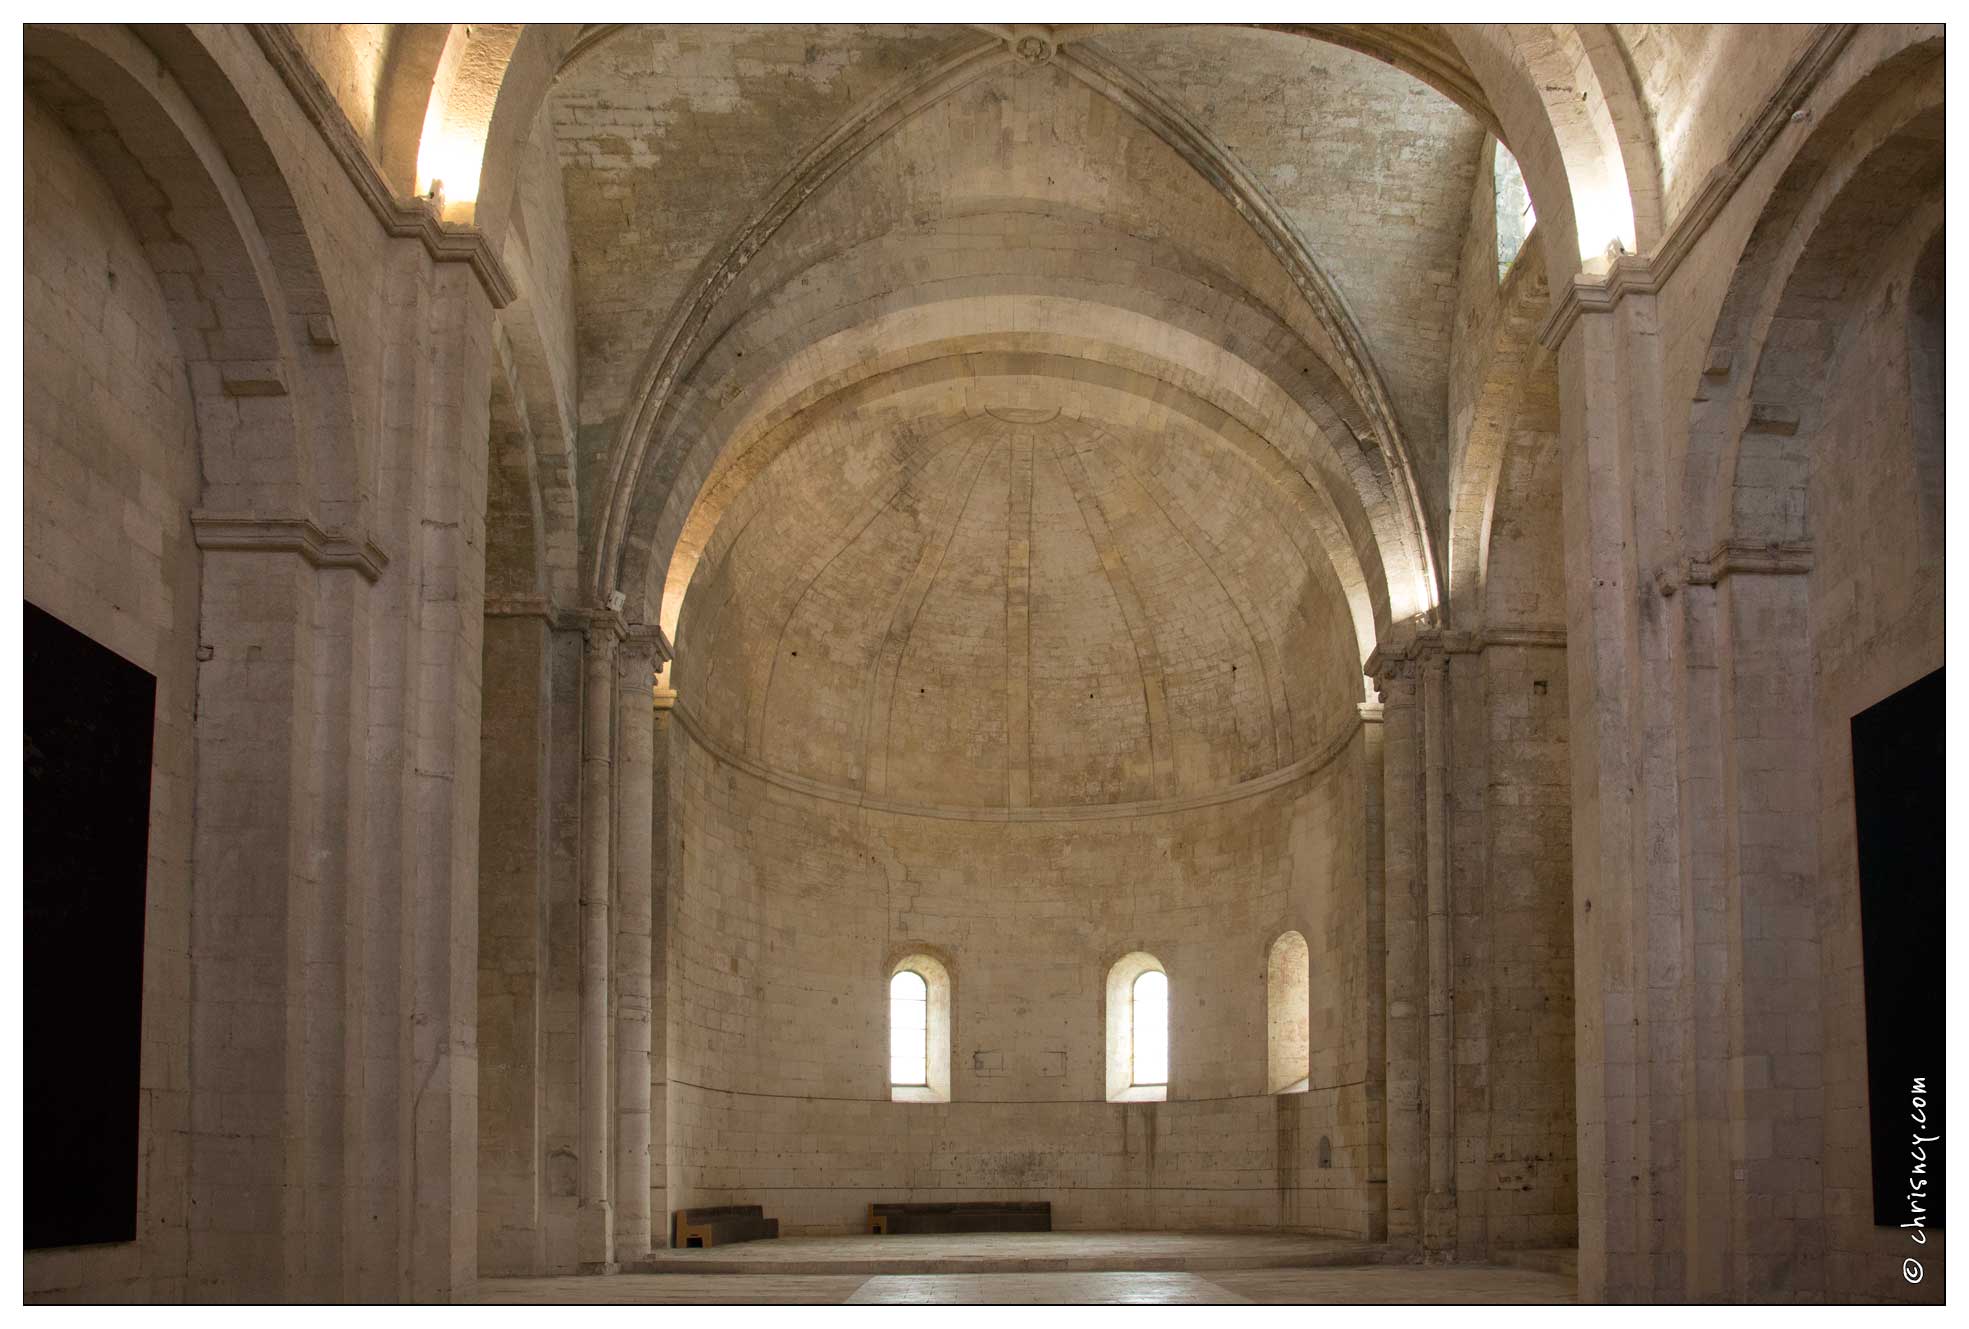 20160123-08_6729-Arles_Abbaye_de_Montmajour.jpg